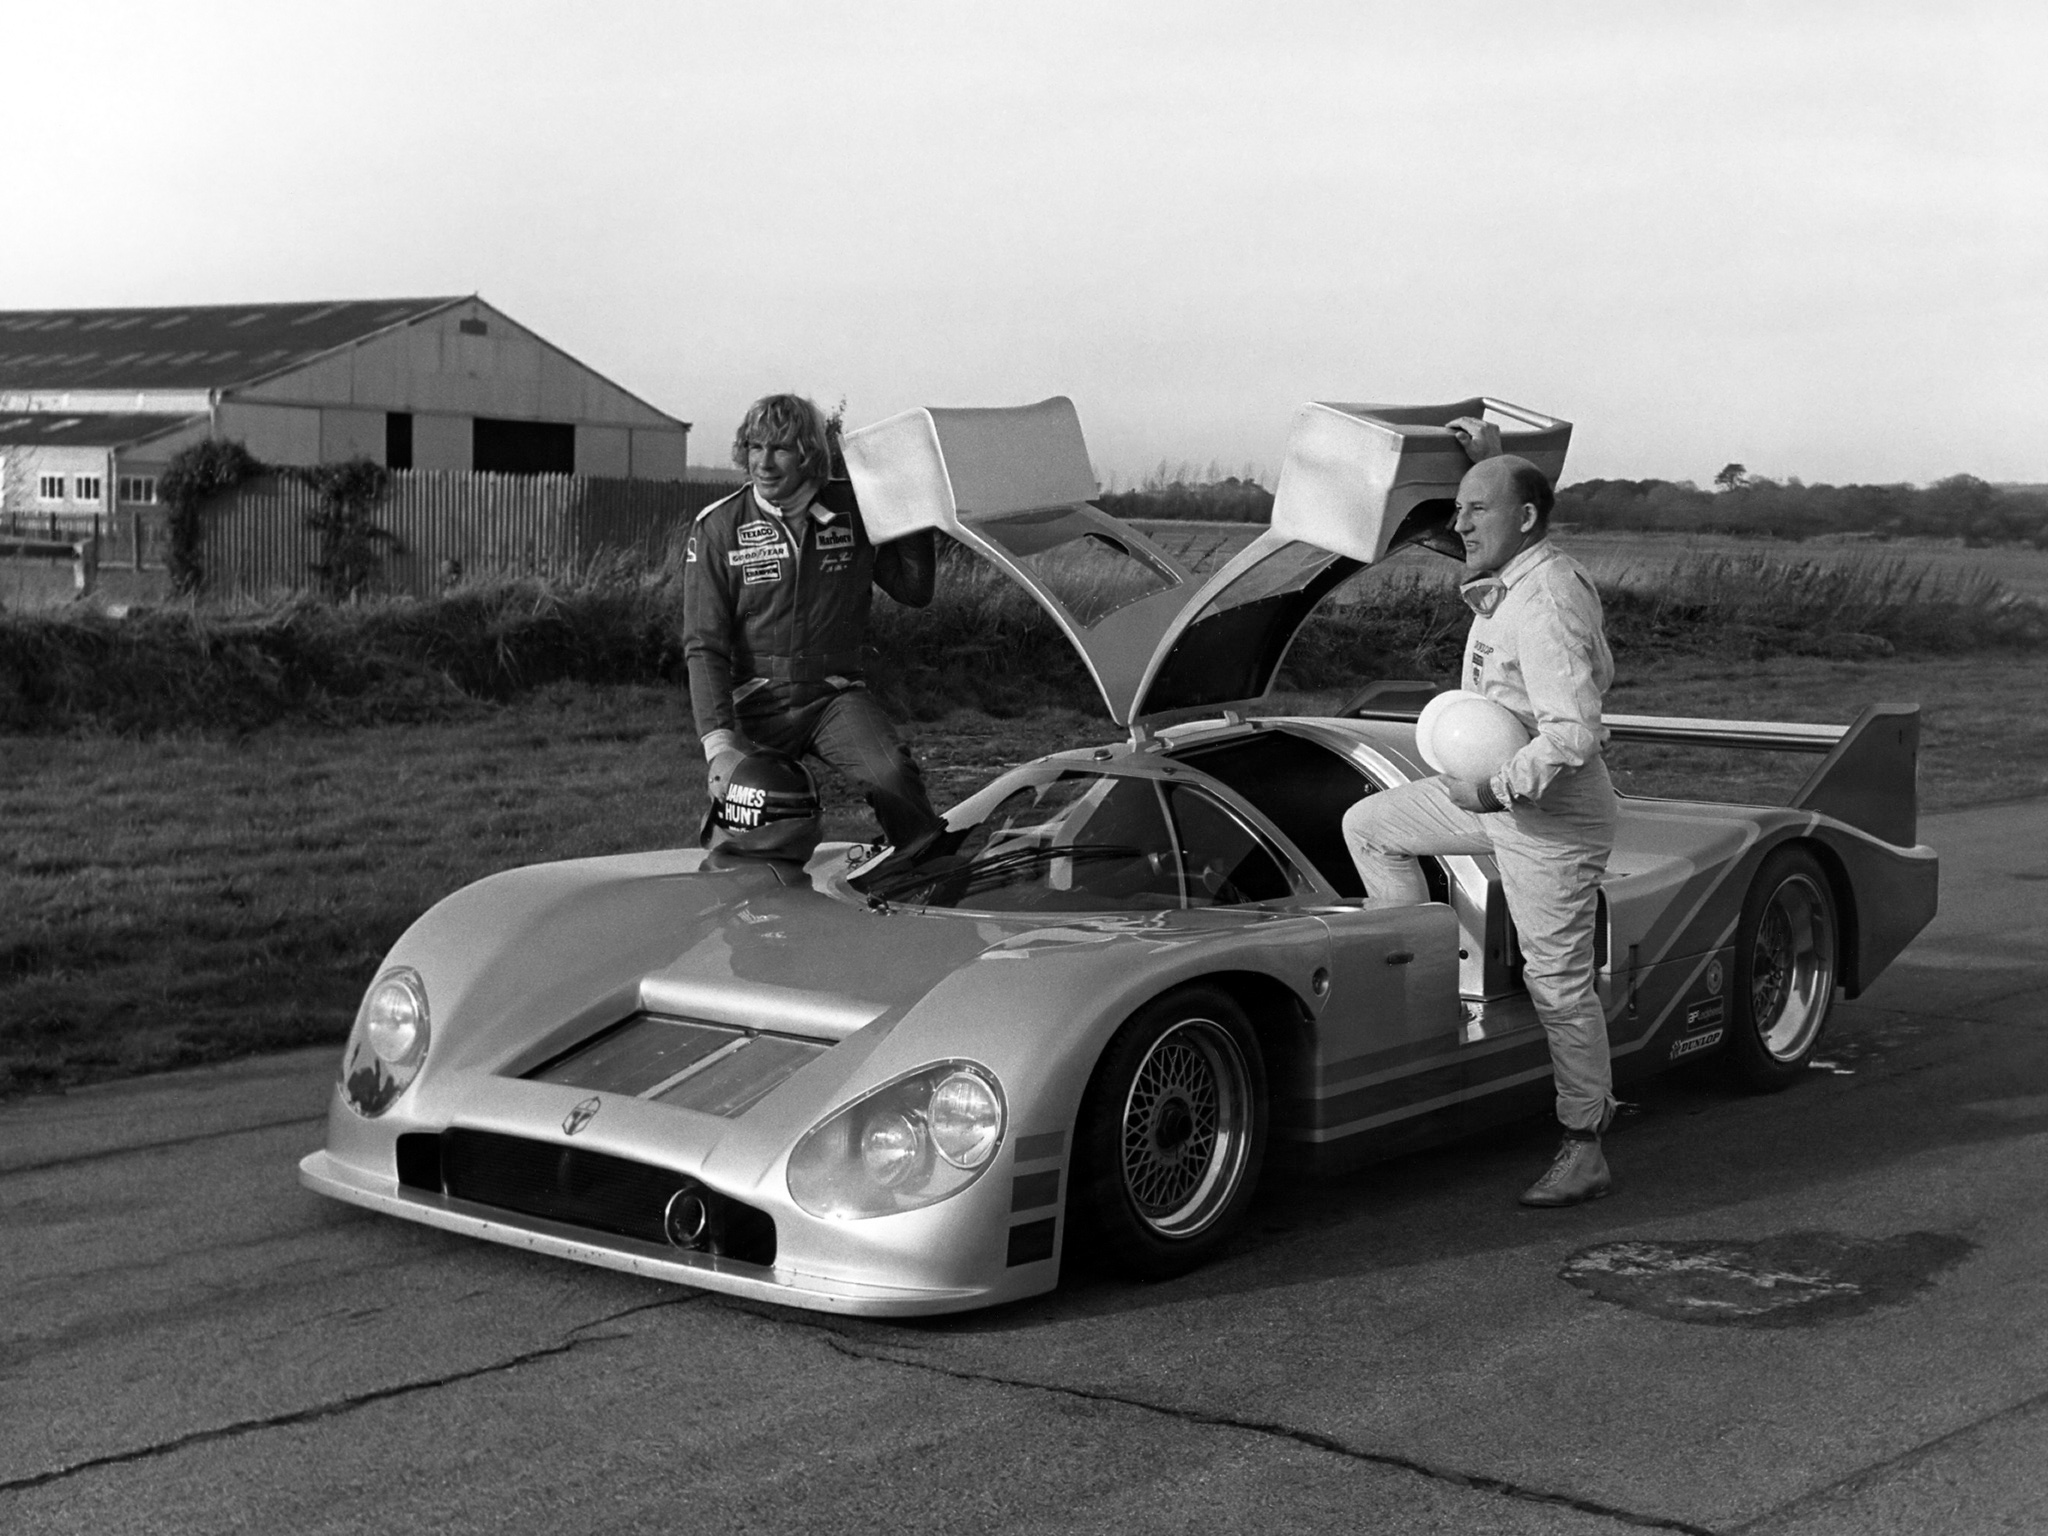 1981, Nimrod, Aston, Martin, Nra c2, Group c, Race, Racing Wallpaper